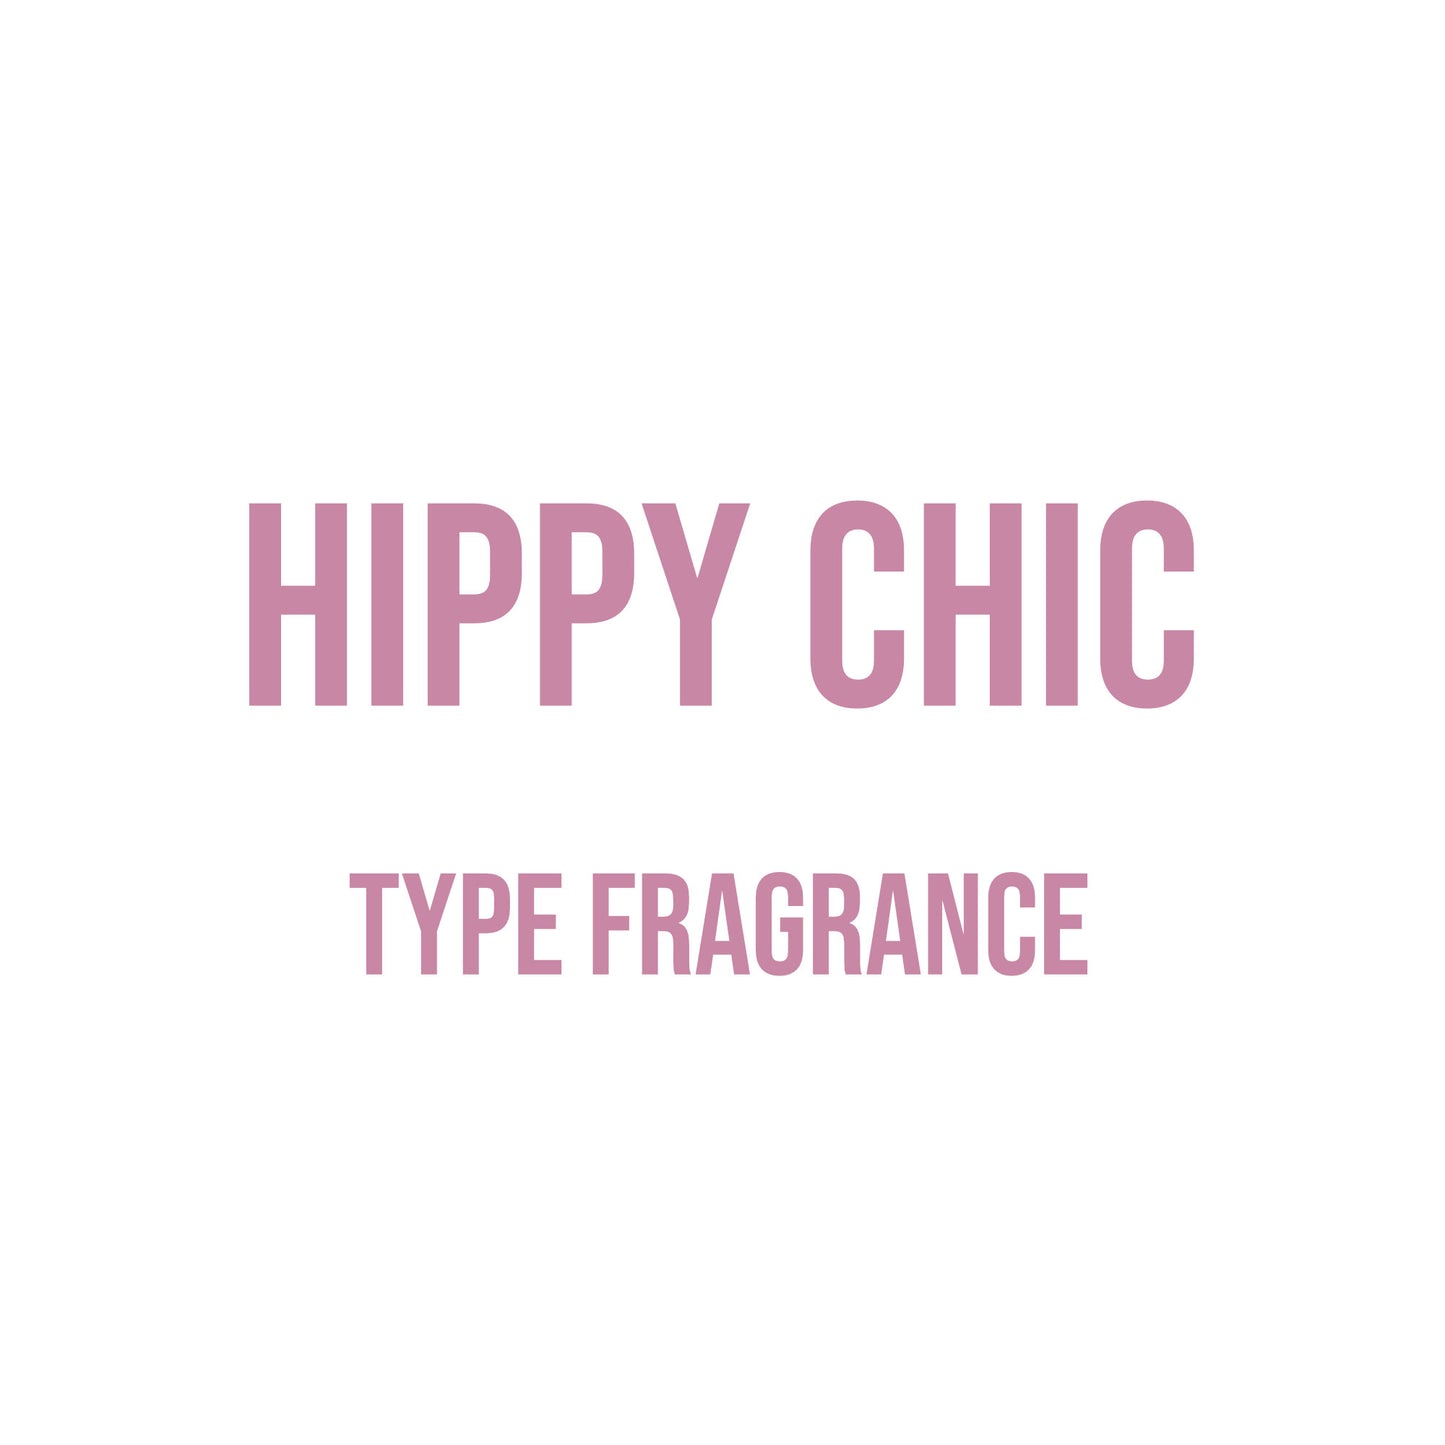 Hippy Chic Type Fragrance